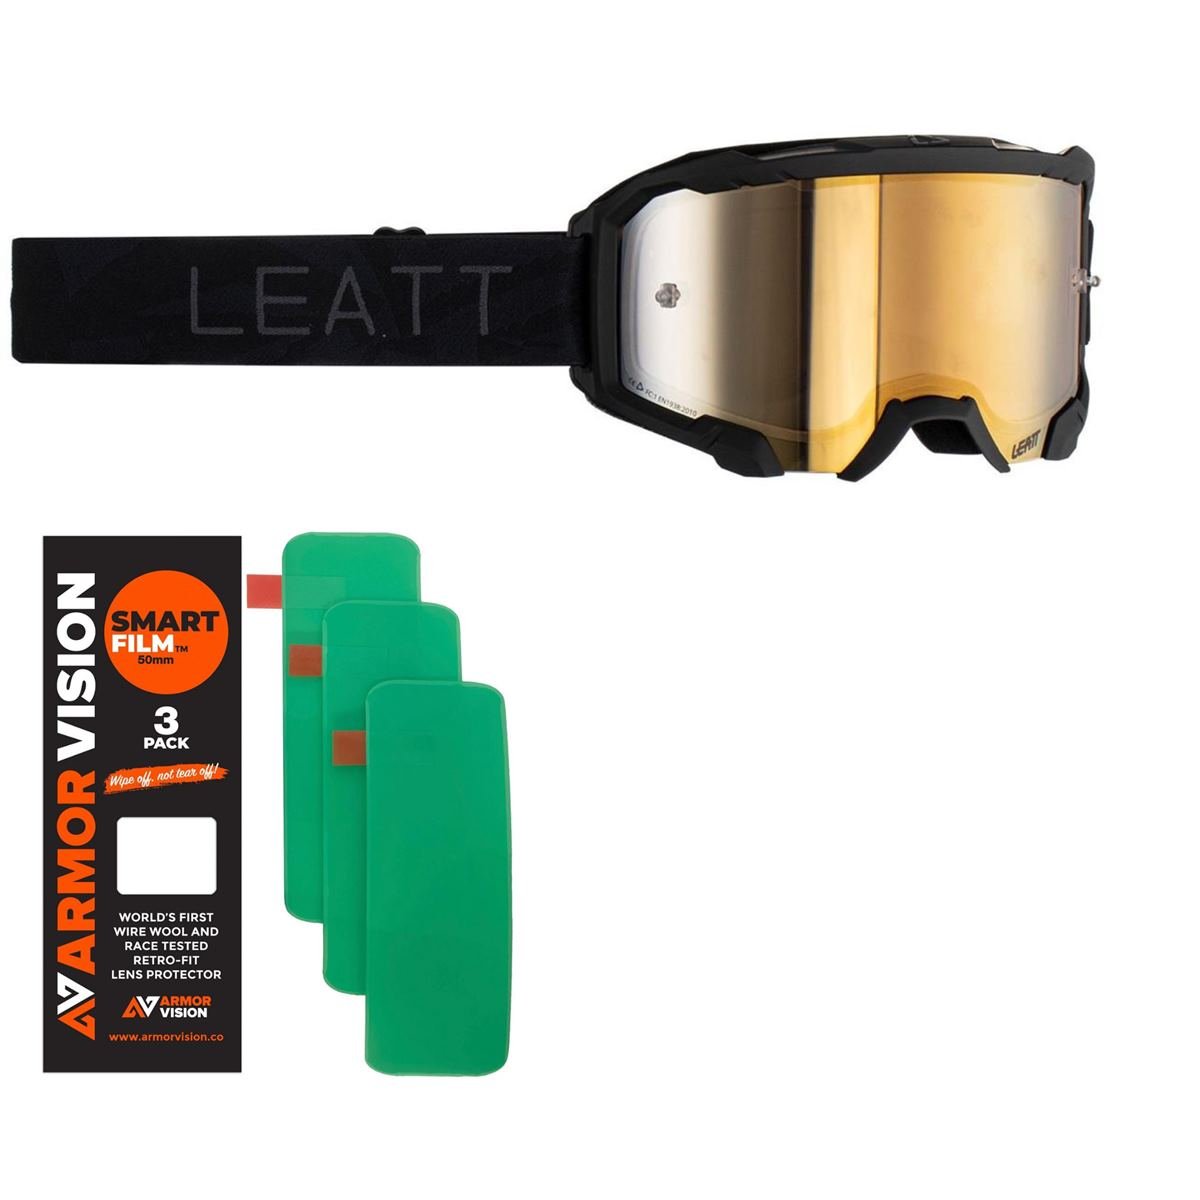 Leatt Maschera Velocity 4.5 Set: 2 pezzi, Stealth + Smart Film Lens Protector